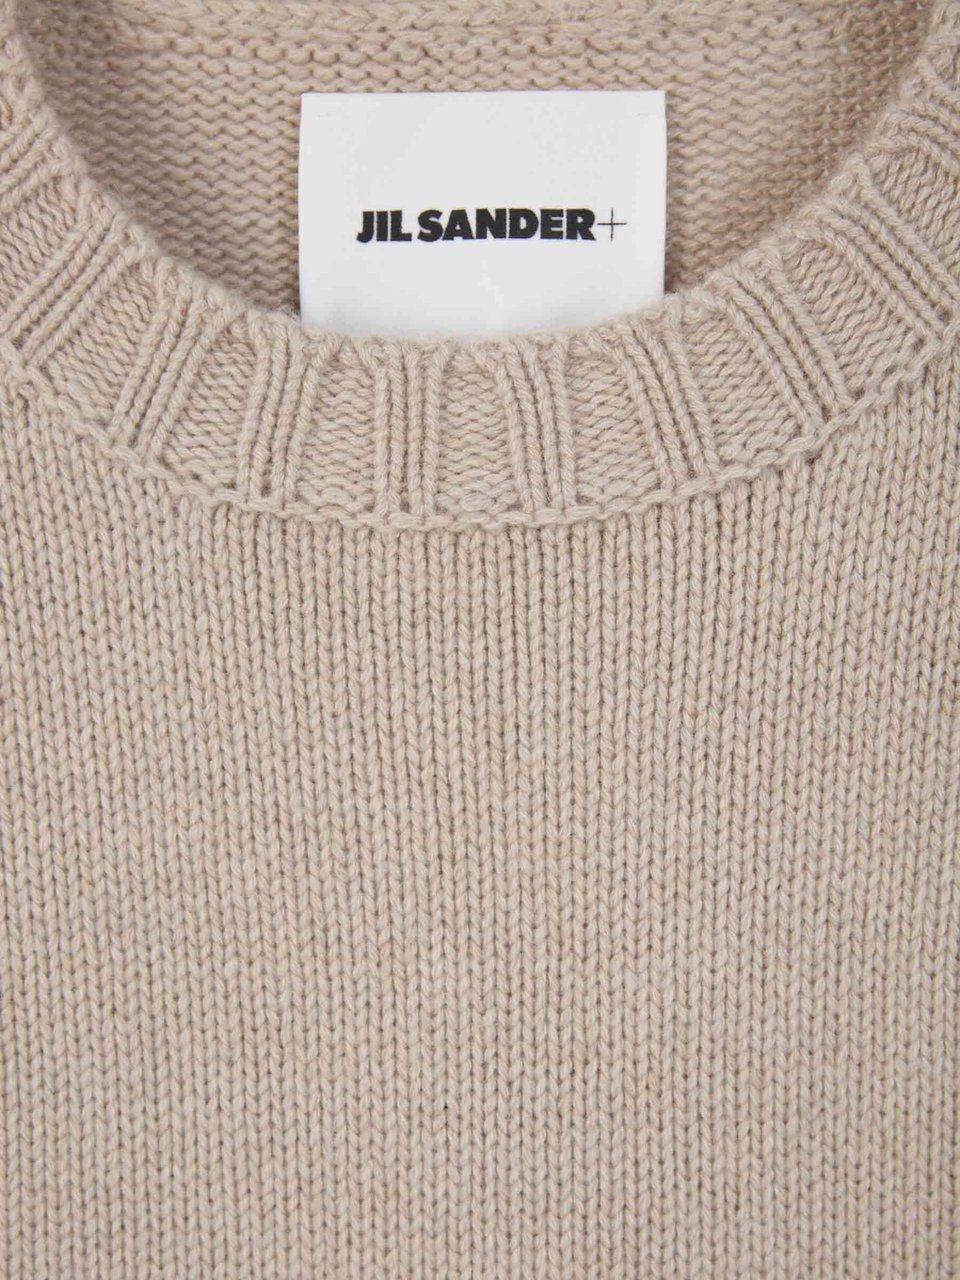 Jil Sander Cashmere Knit Sweater Beige